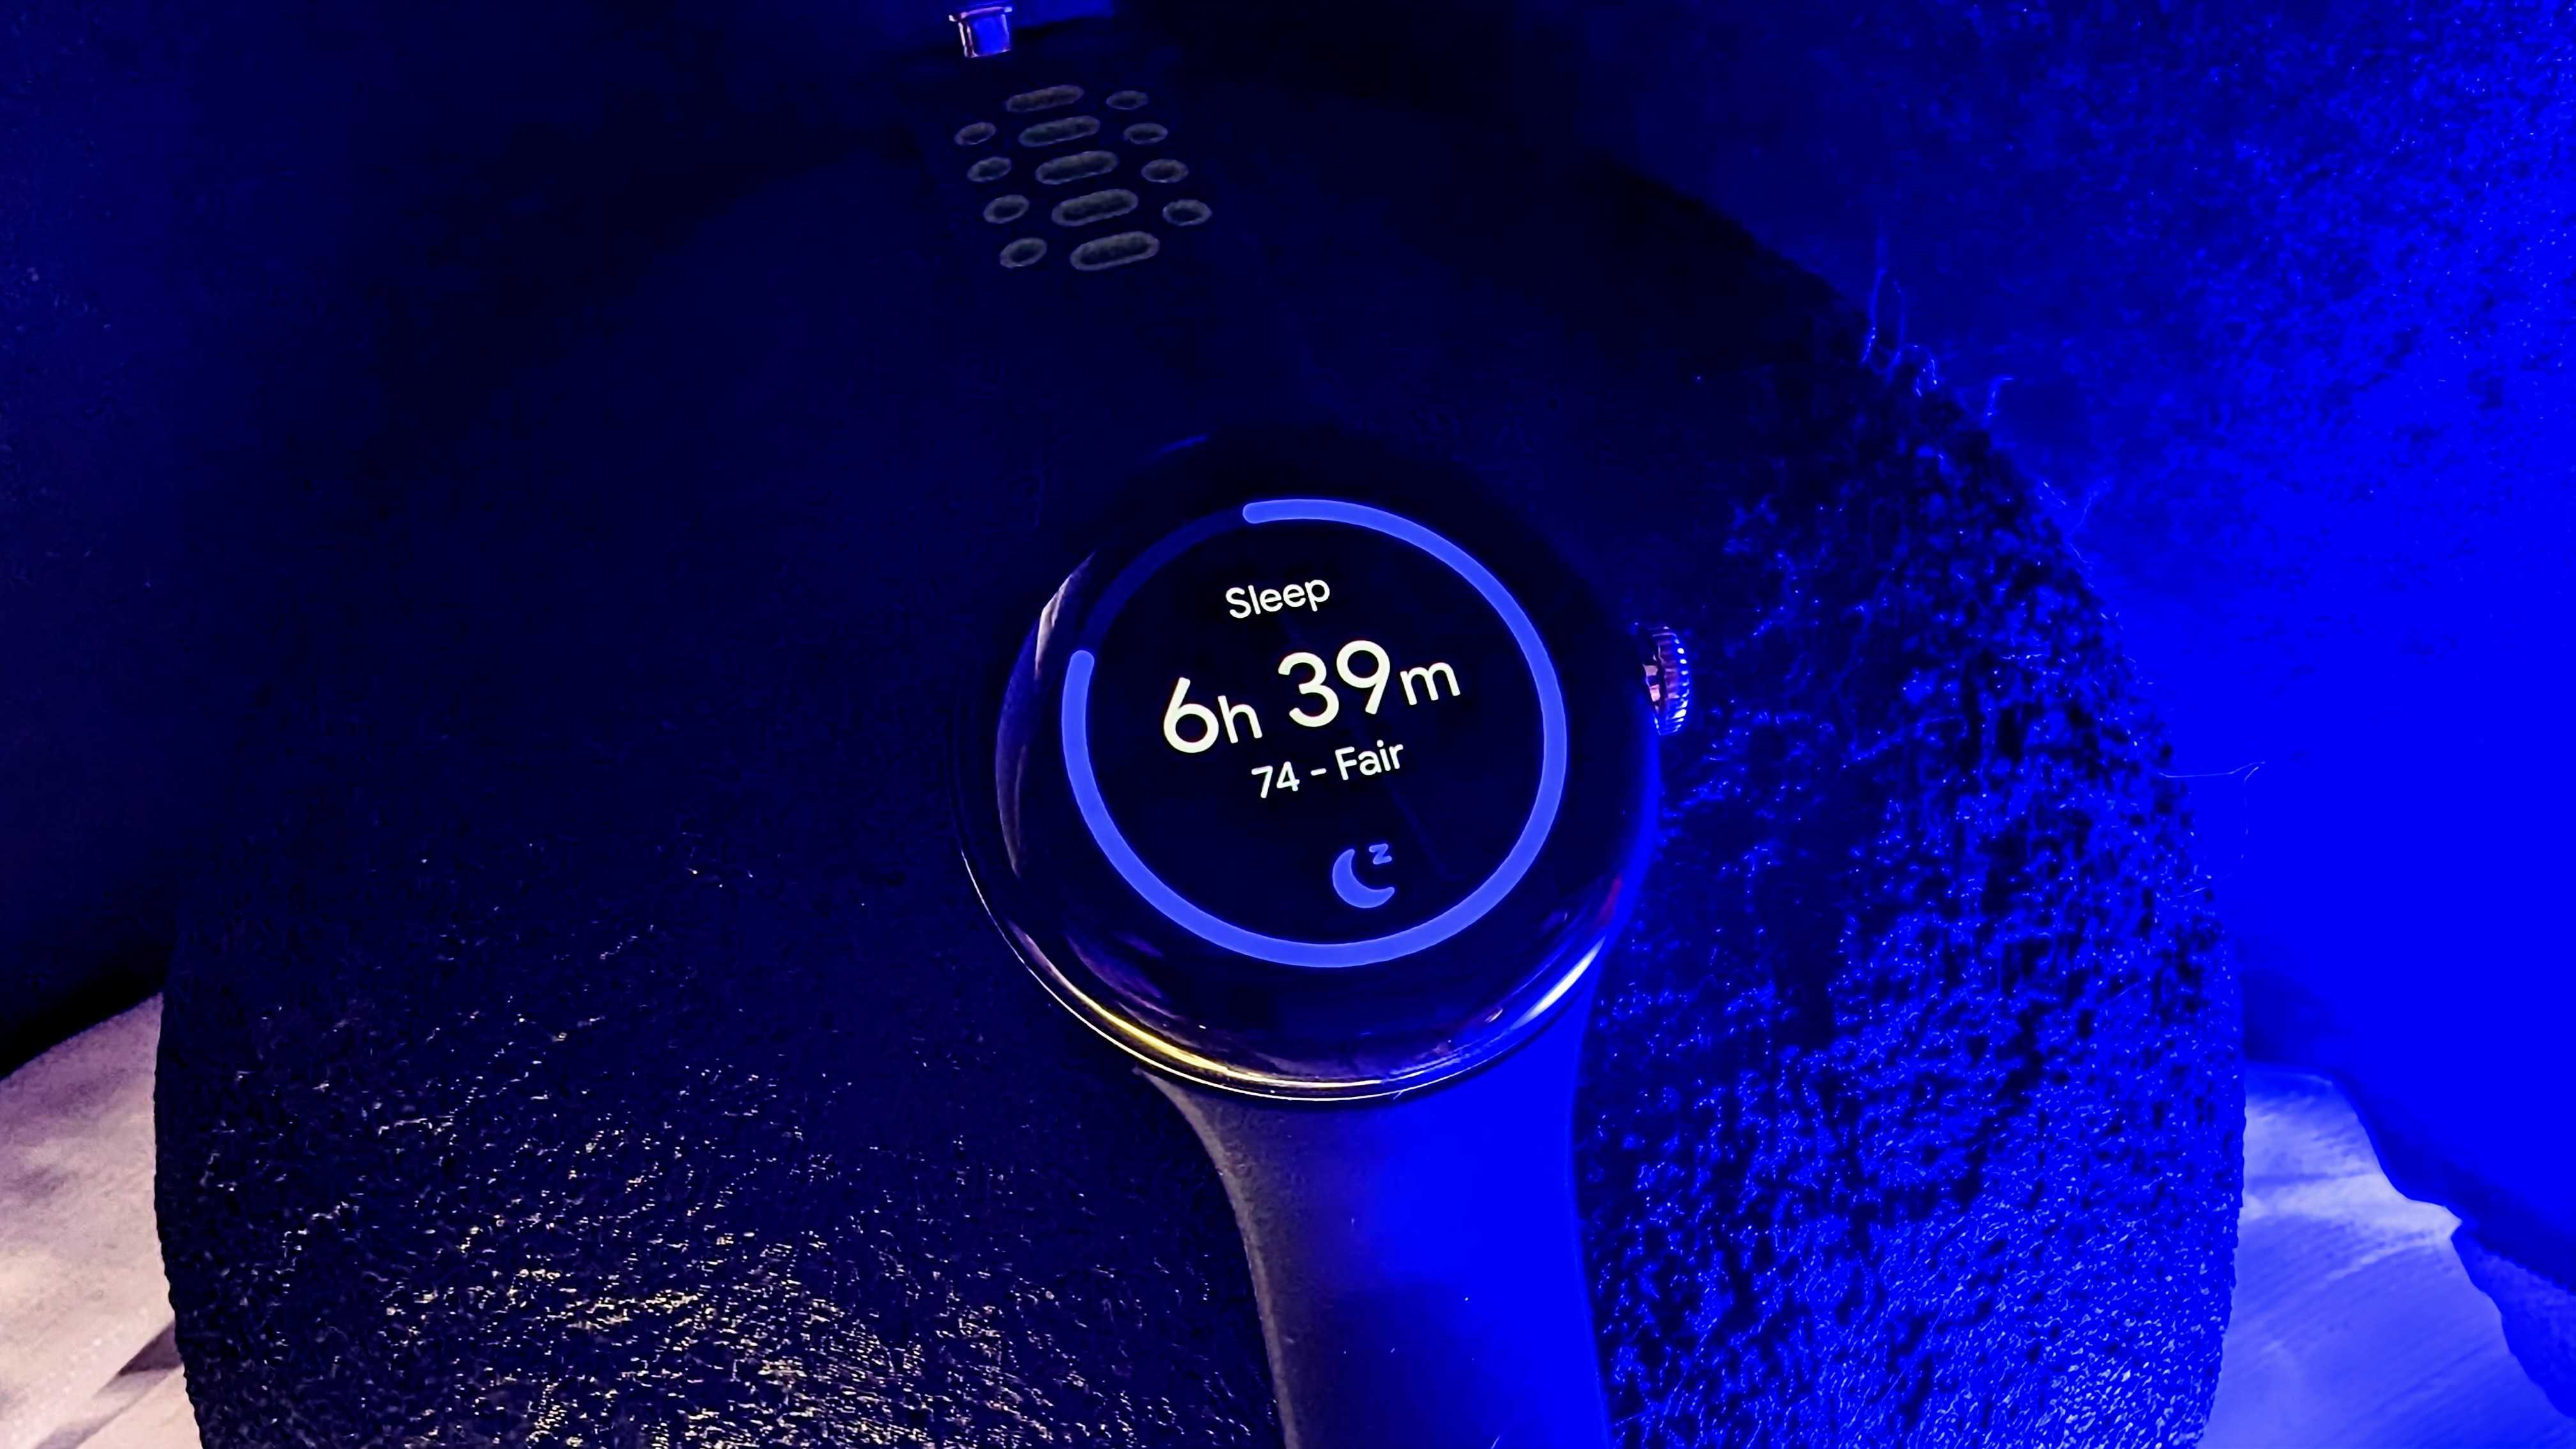 Fitbit Sleep Tracking Tile on Pixel Watch